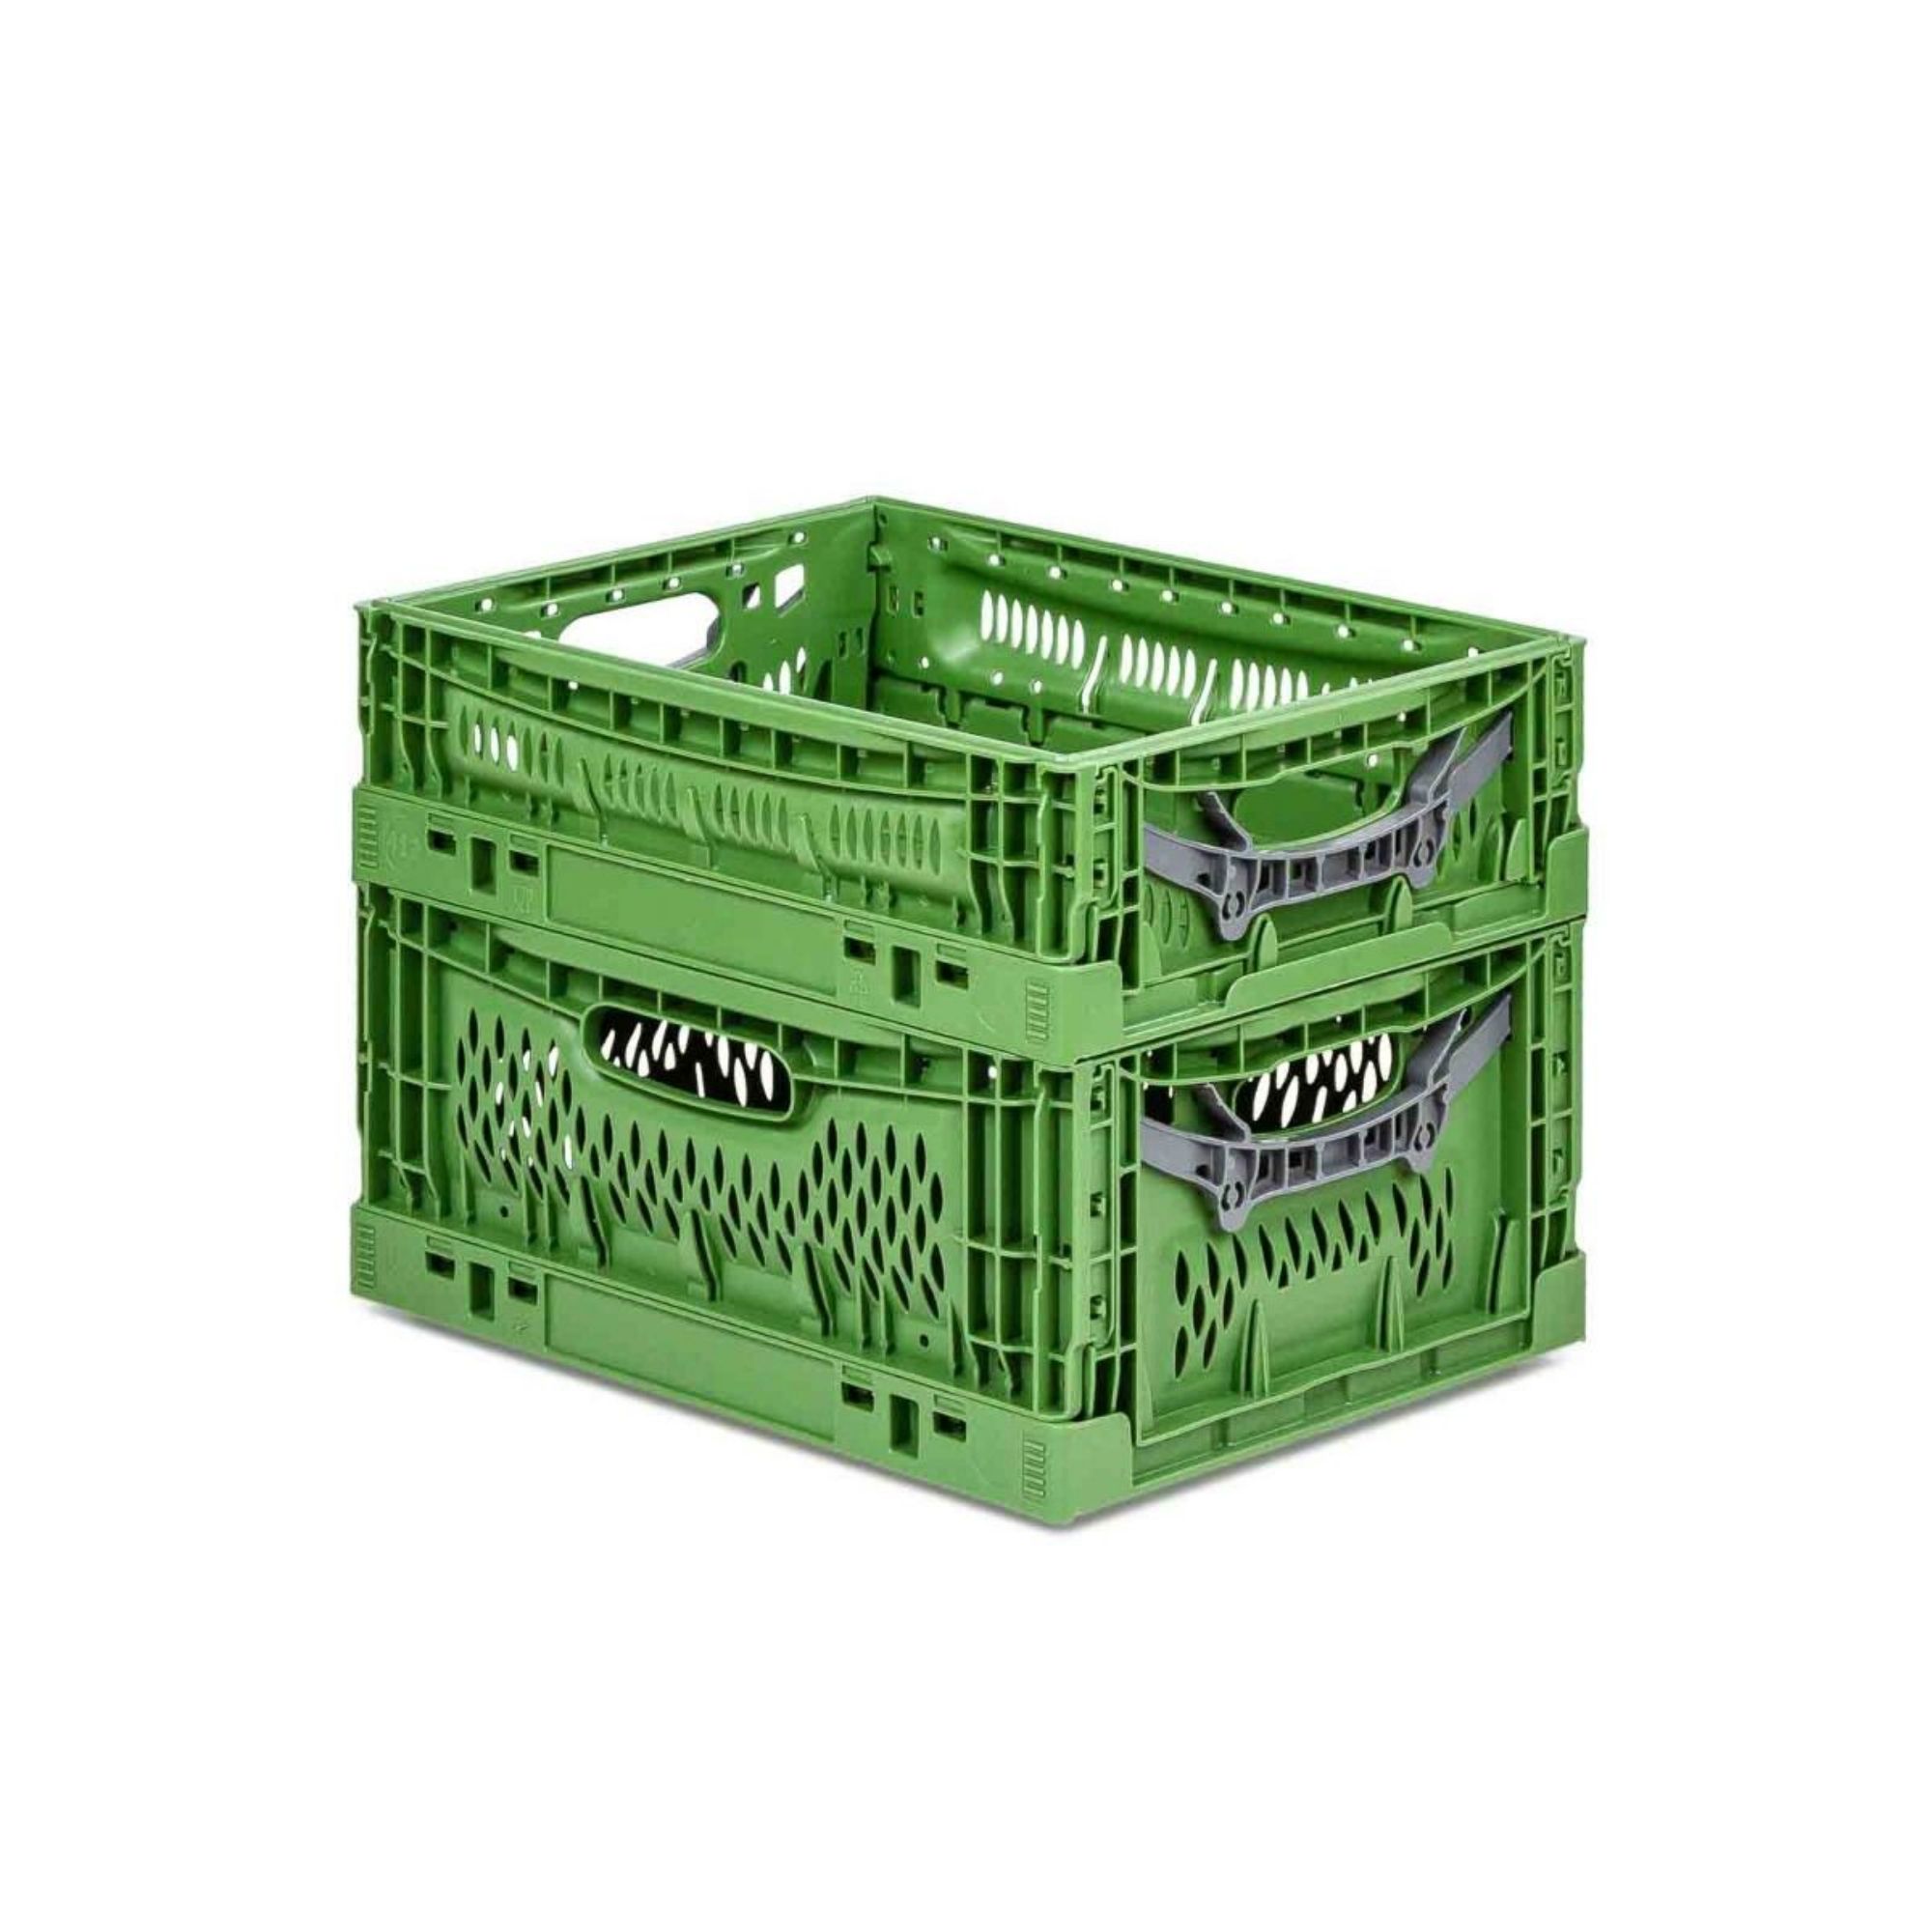 SuperSparSet 10x Stabile Profi-Klappbox Chameleon in Industriequalität | HxBxT 12x40x60cm | 23 Liter | klappbar stapelbar durchbrochen lebensmittelecht | Eurobox Eurobehälter Transportbehälter Stapelbehlter Faltbox